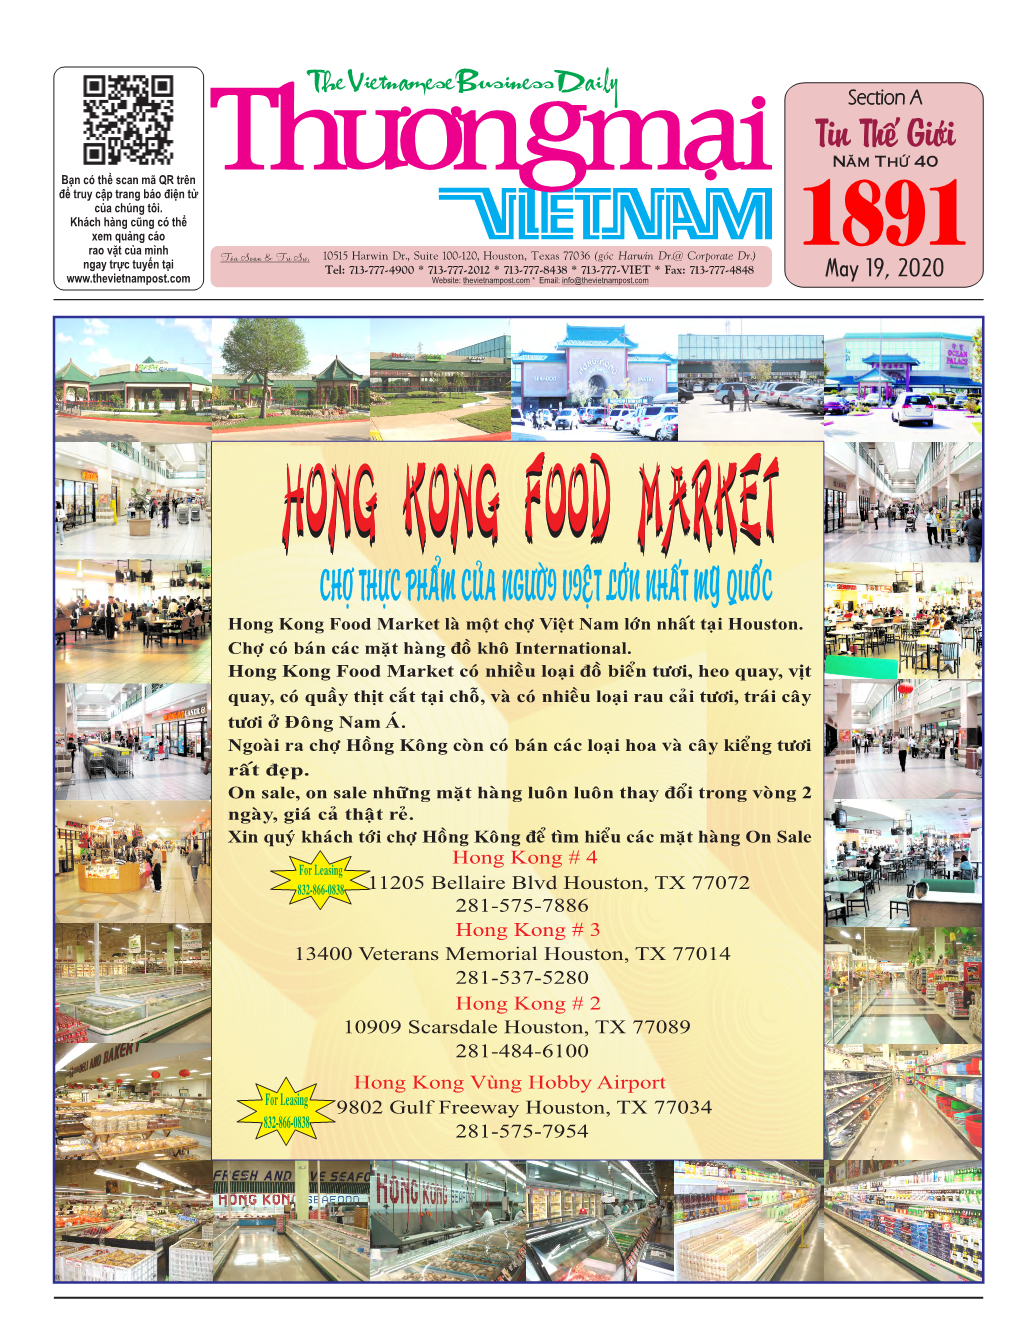 May 19, 2020 Website: Thevietnampost.Com * Email: Info@Thevietnampost.Com